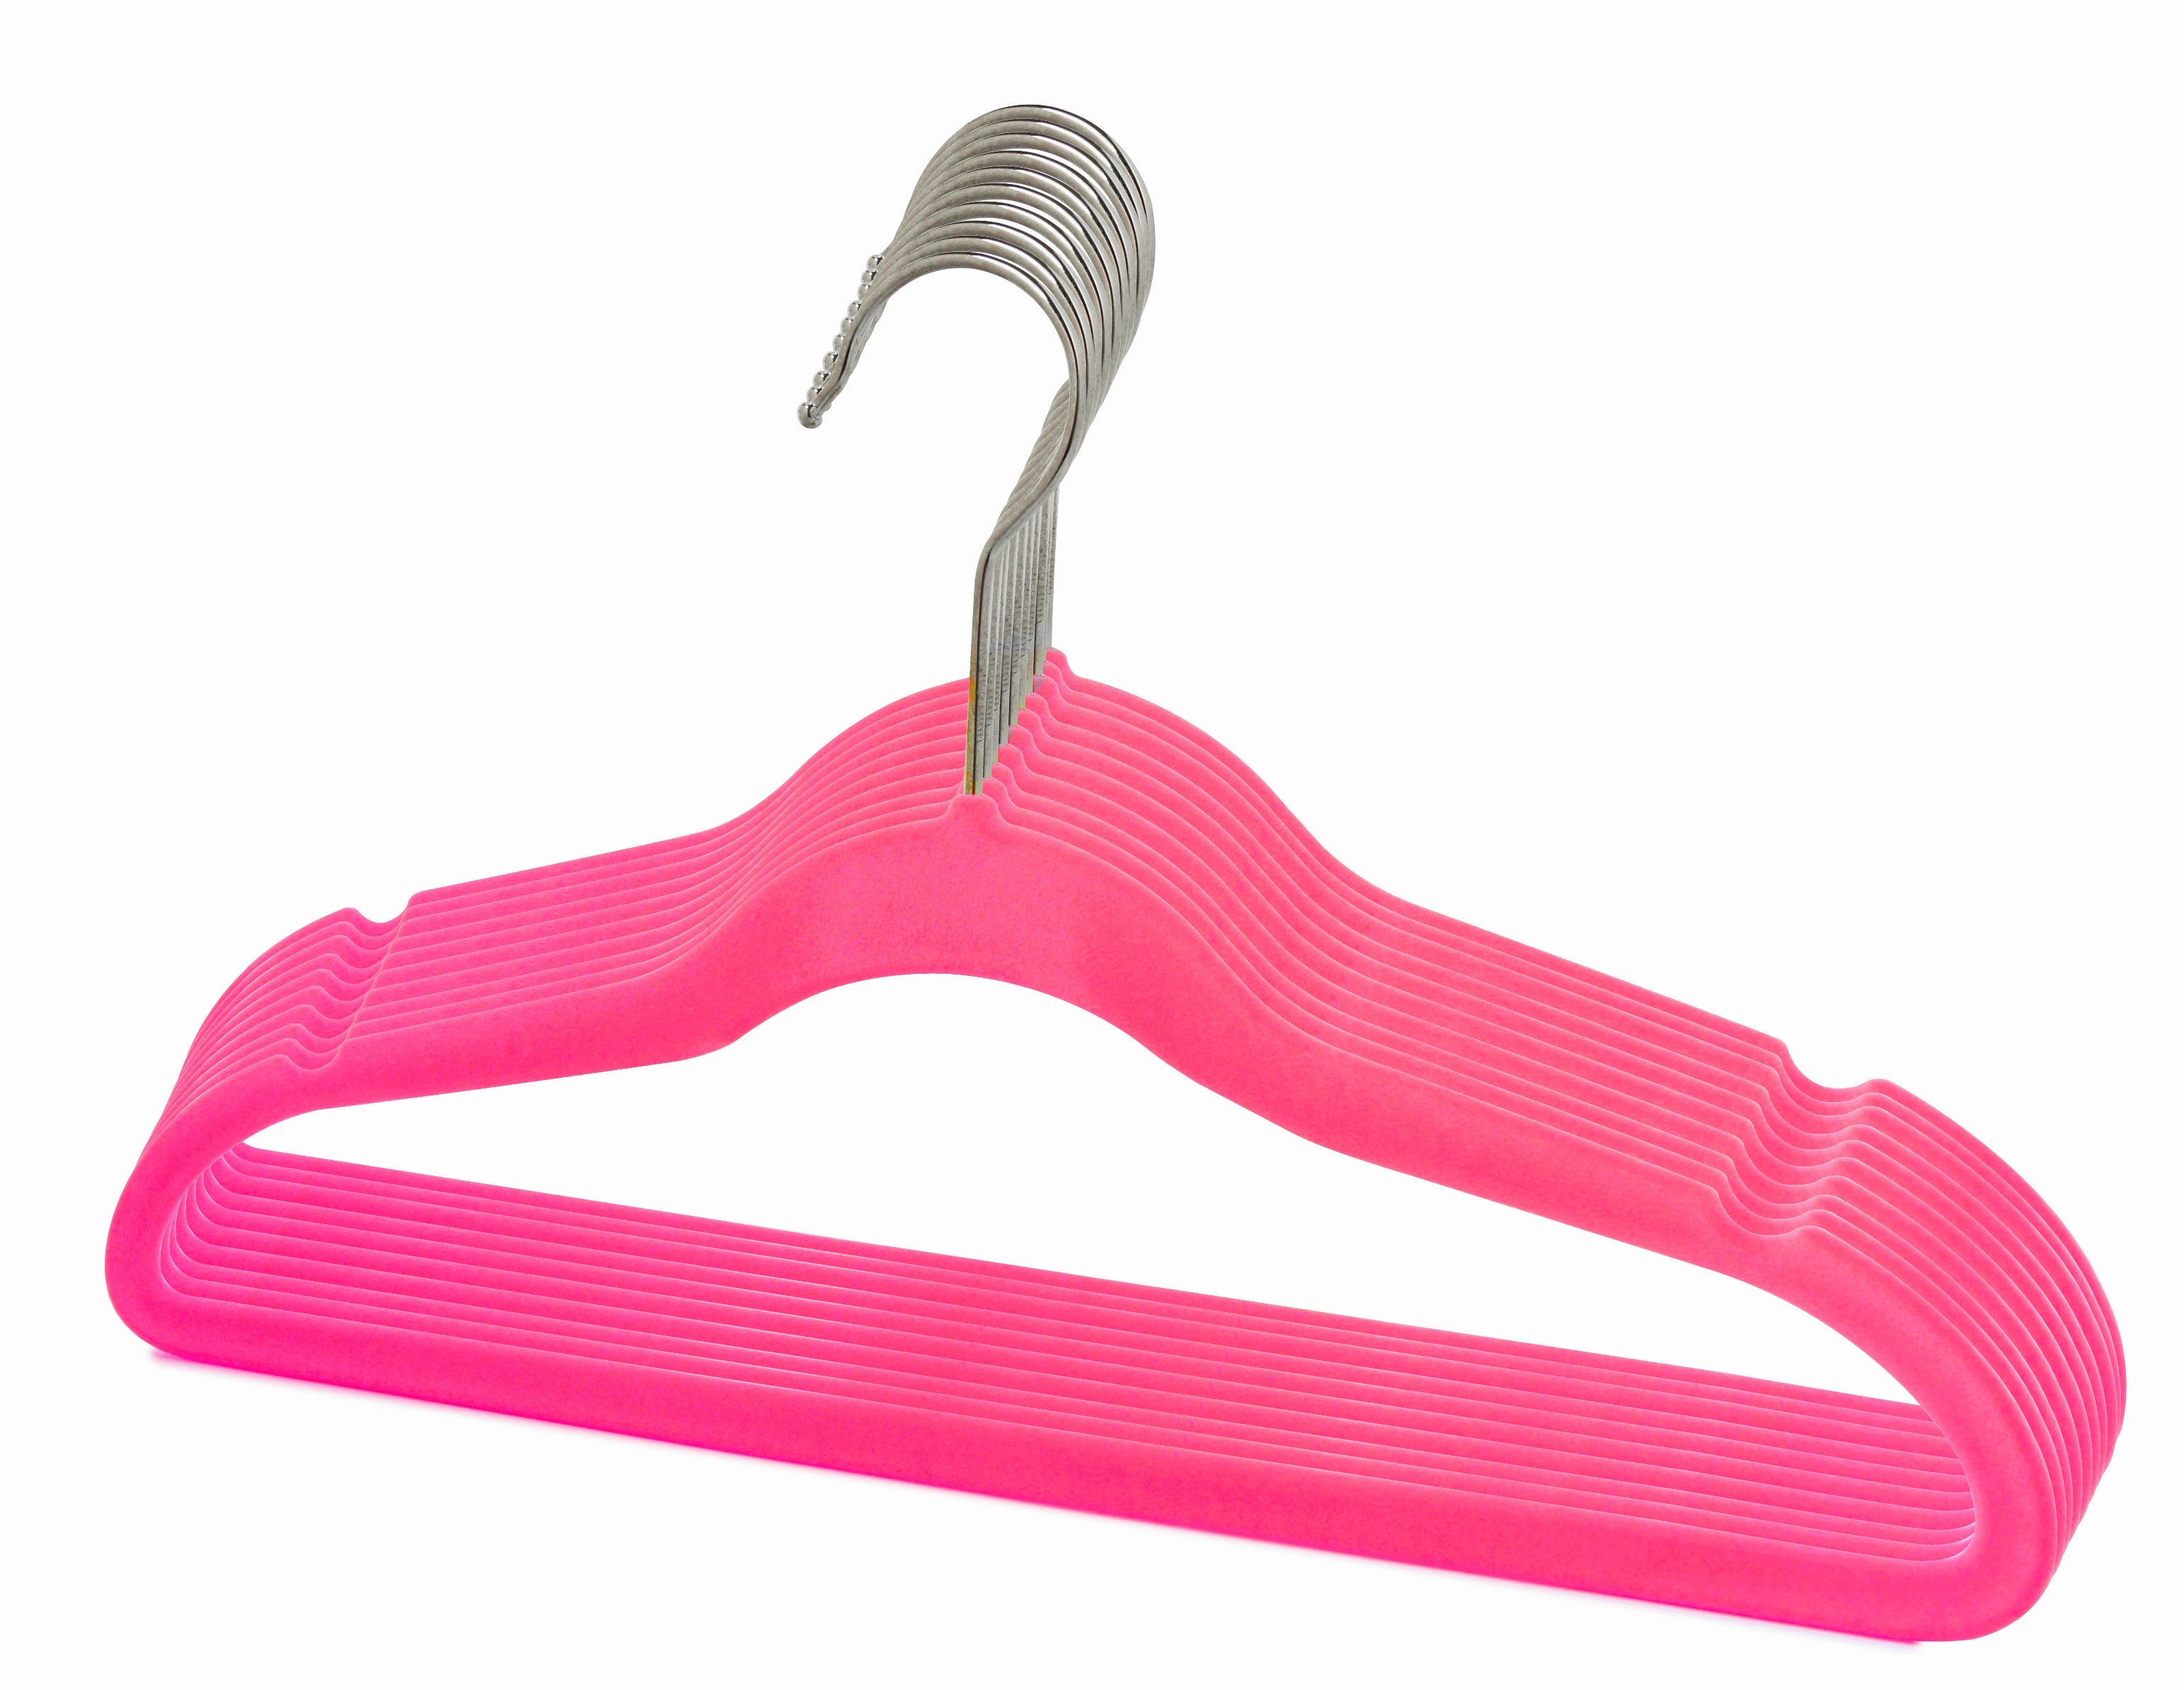 New! Petite Size Slim-LineHot Pink Shirt-Pant Hangers